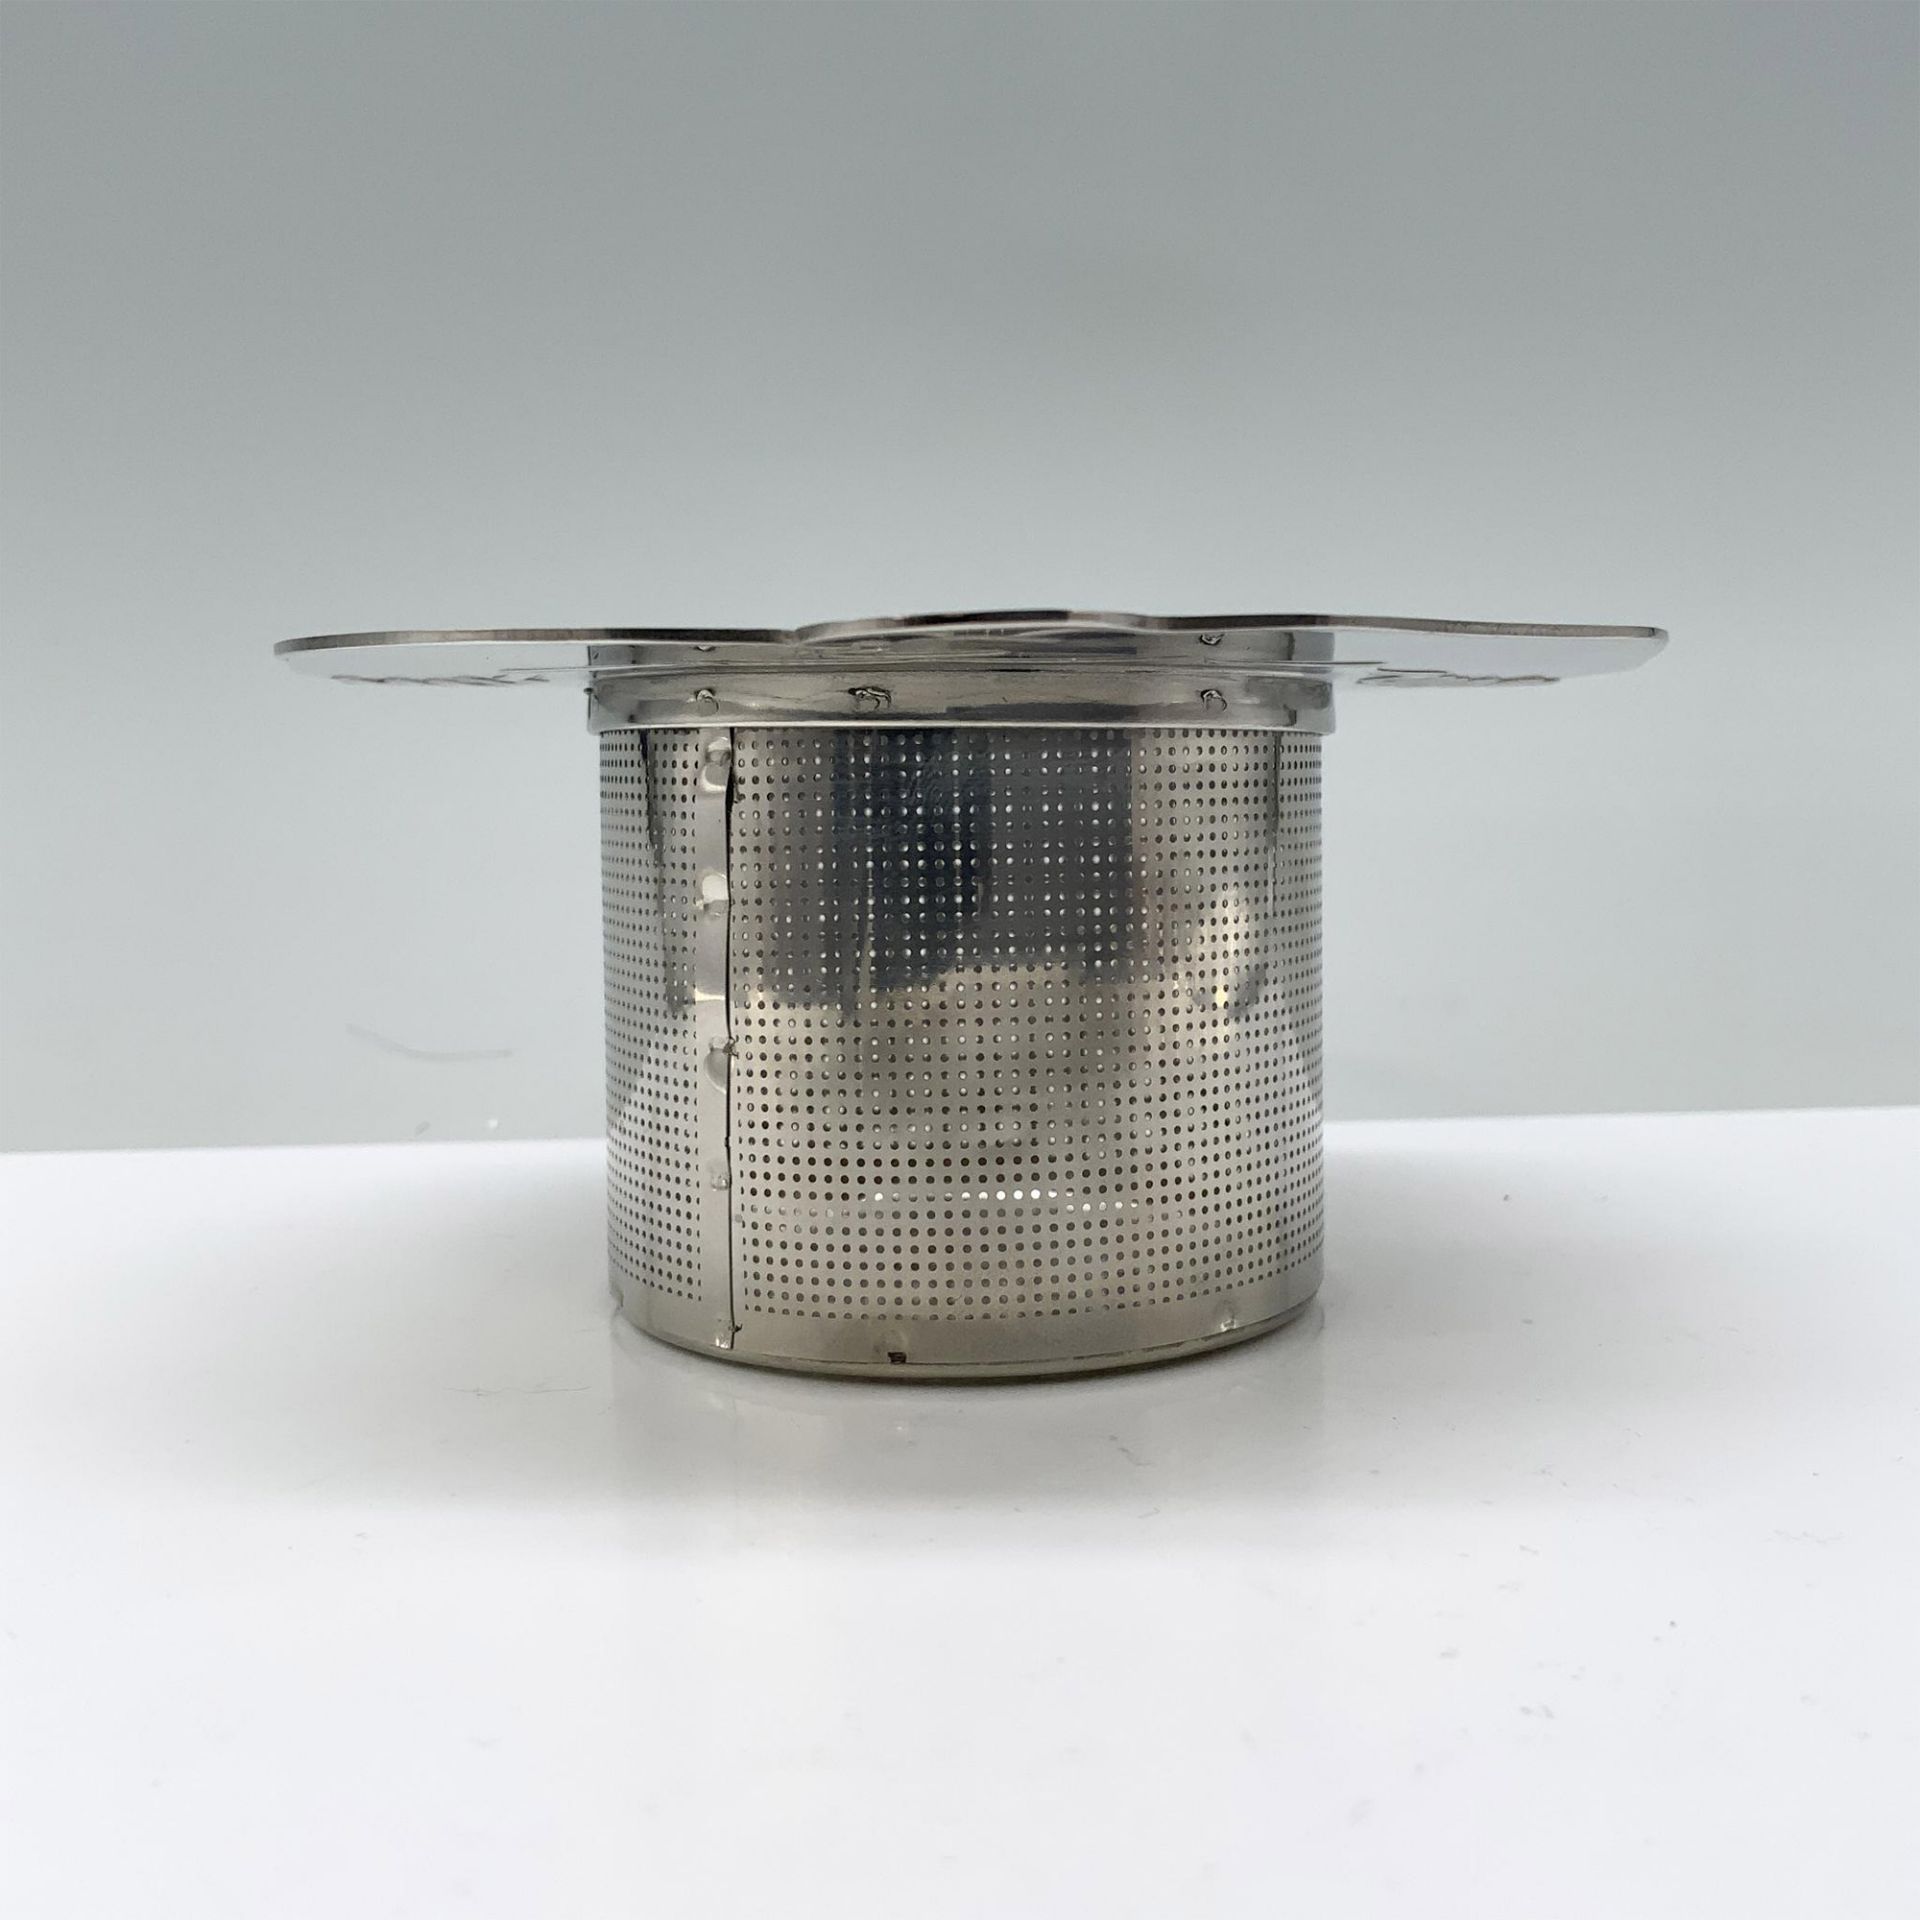 Carrol Boyes Aluminum Tea Infuser, Take It Easy - Image 2 of 4